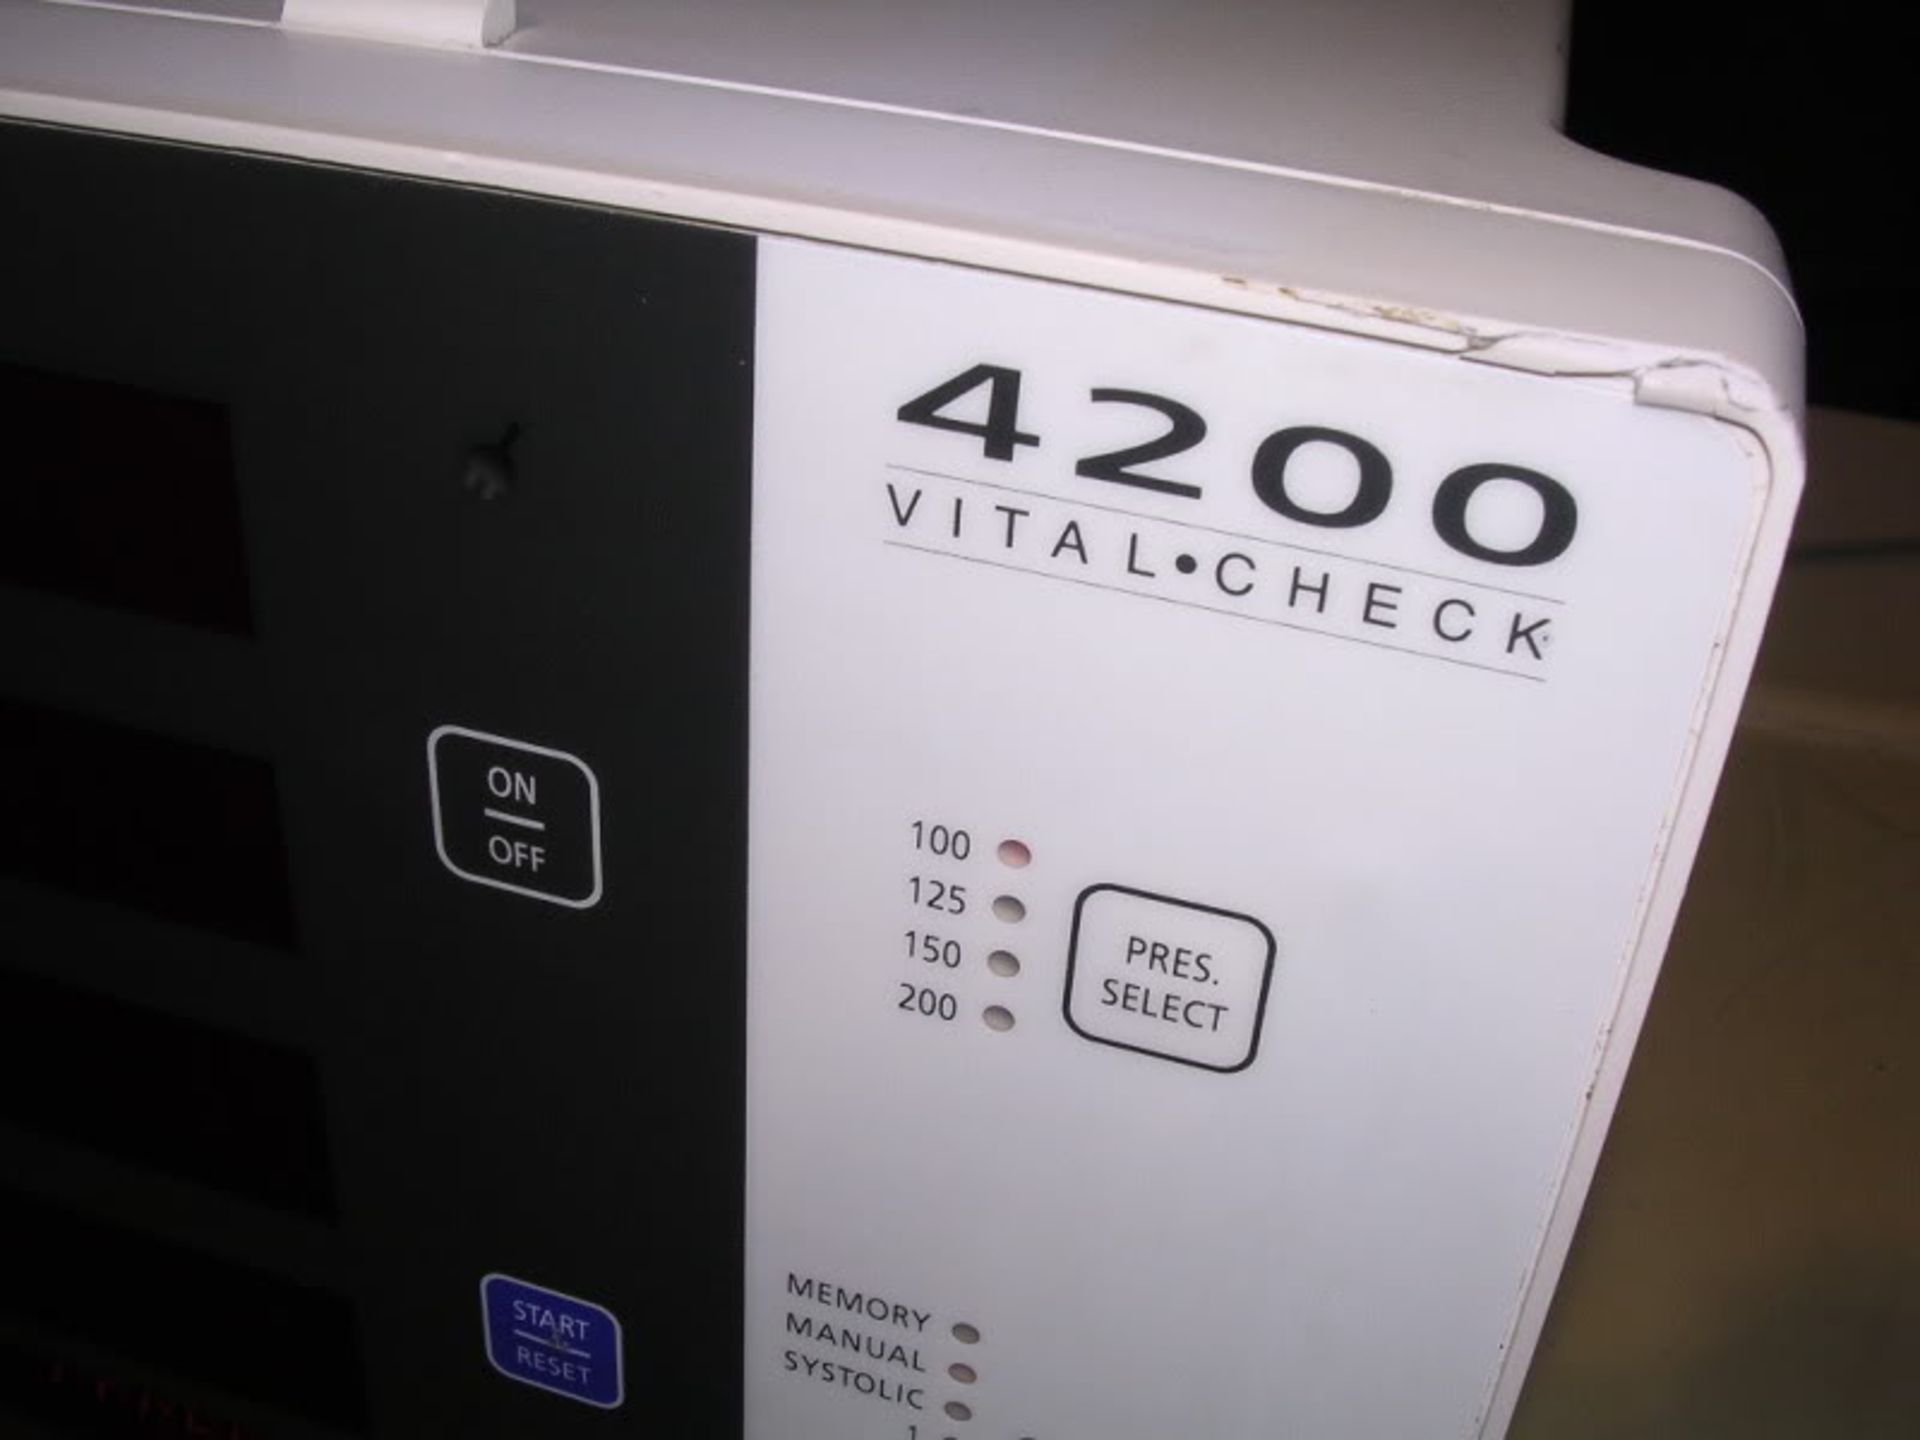 IVAC Model 4200A Vital Check Monitor **, Qty 1, 220759281186 - Image 5 of 6